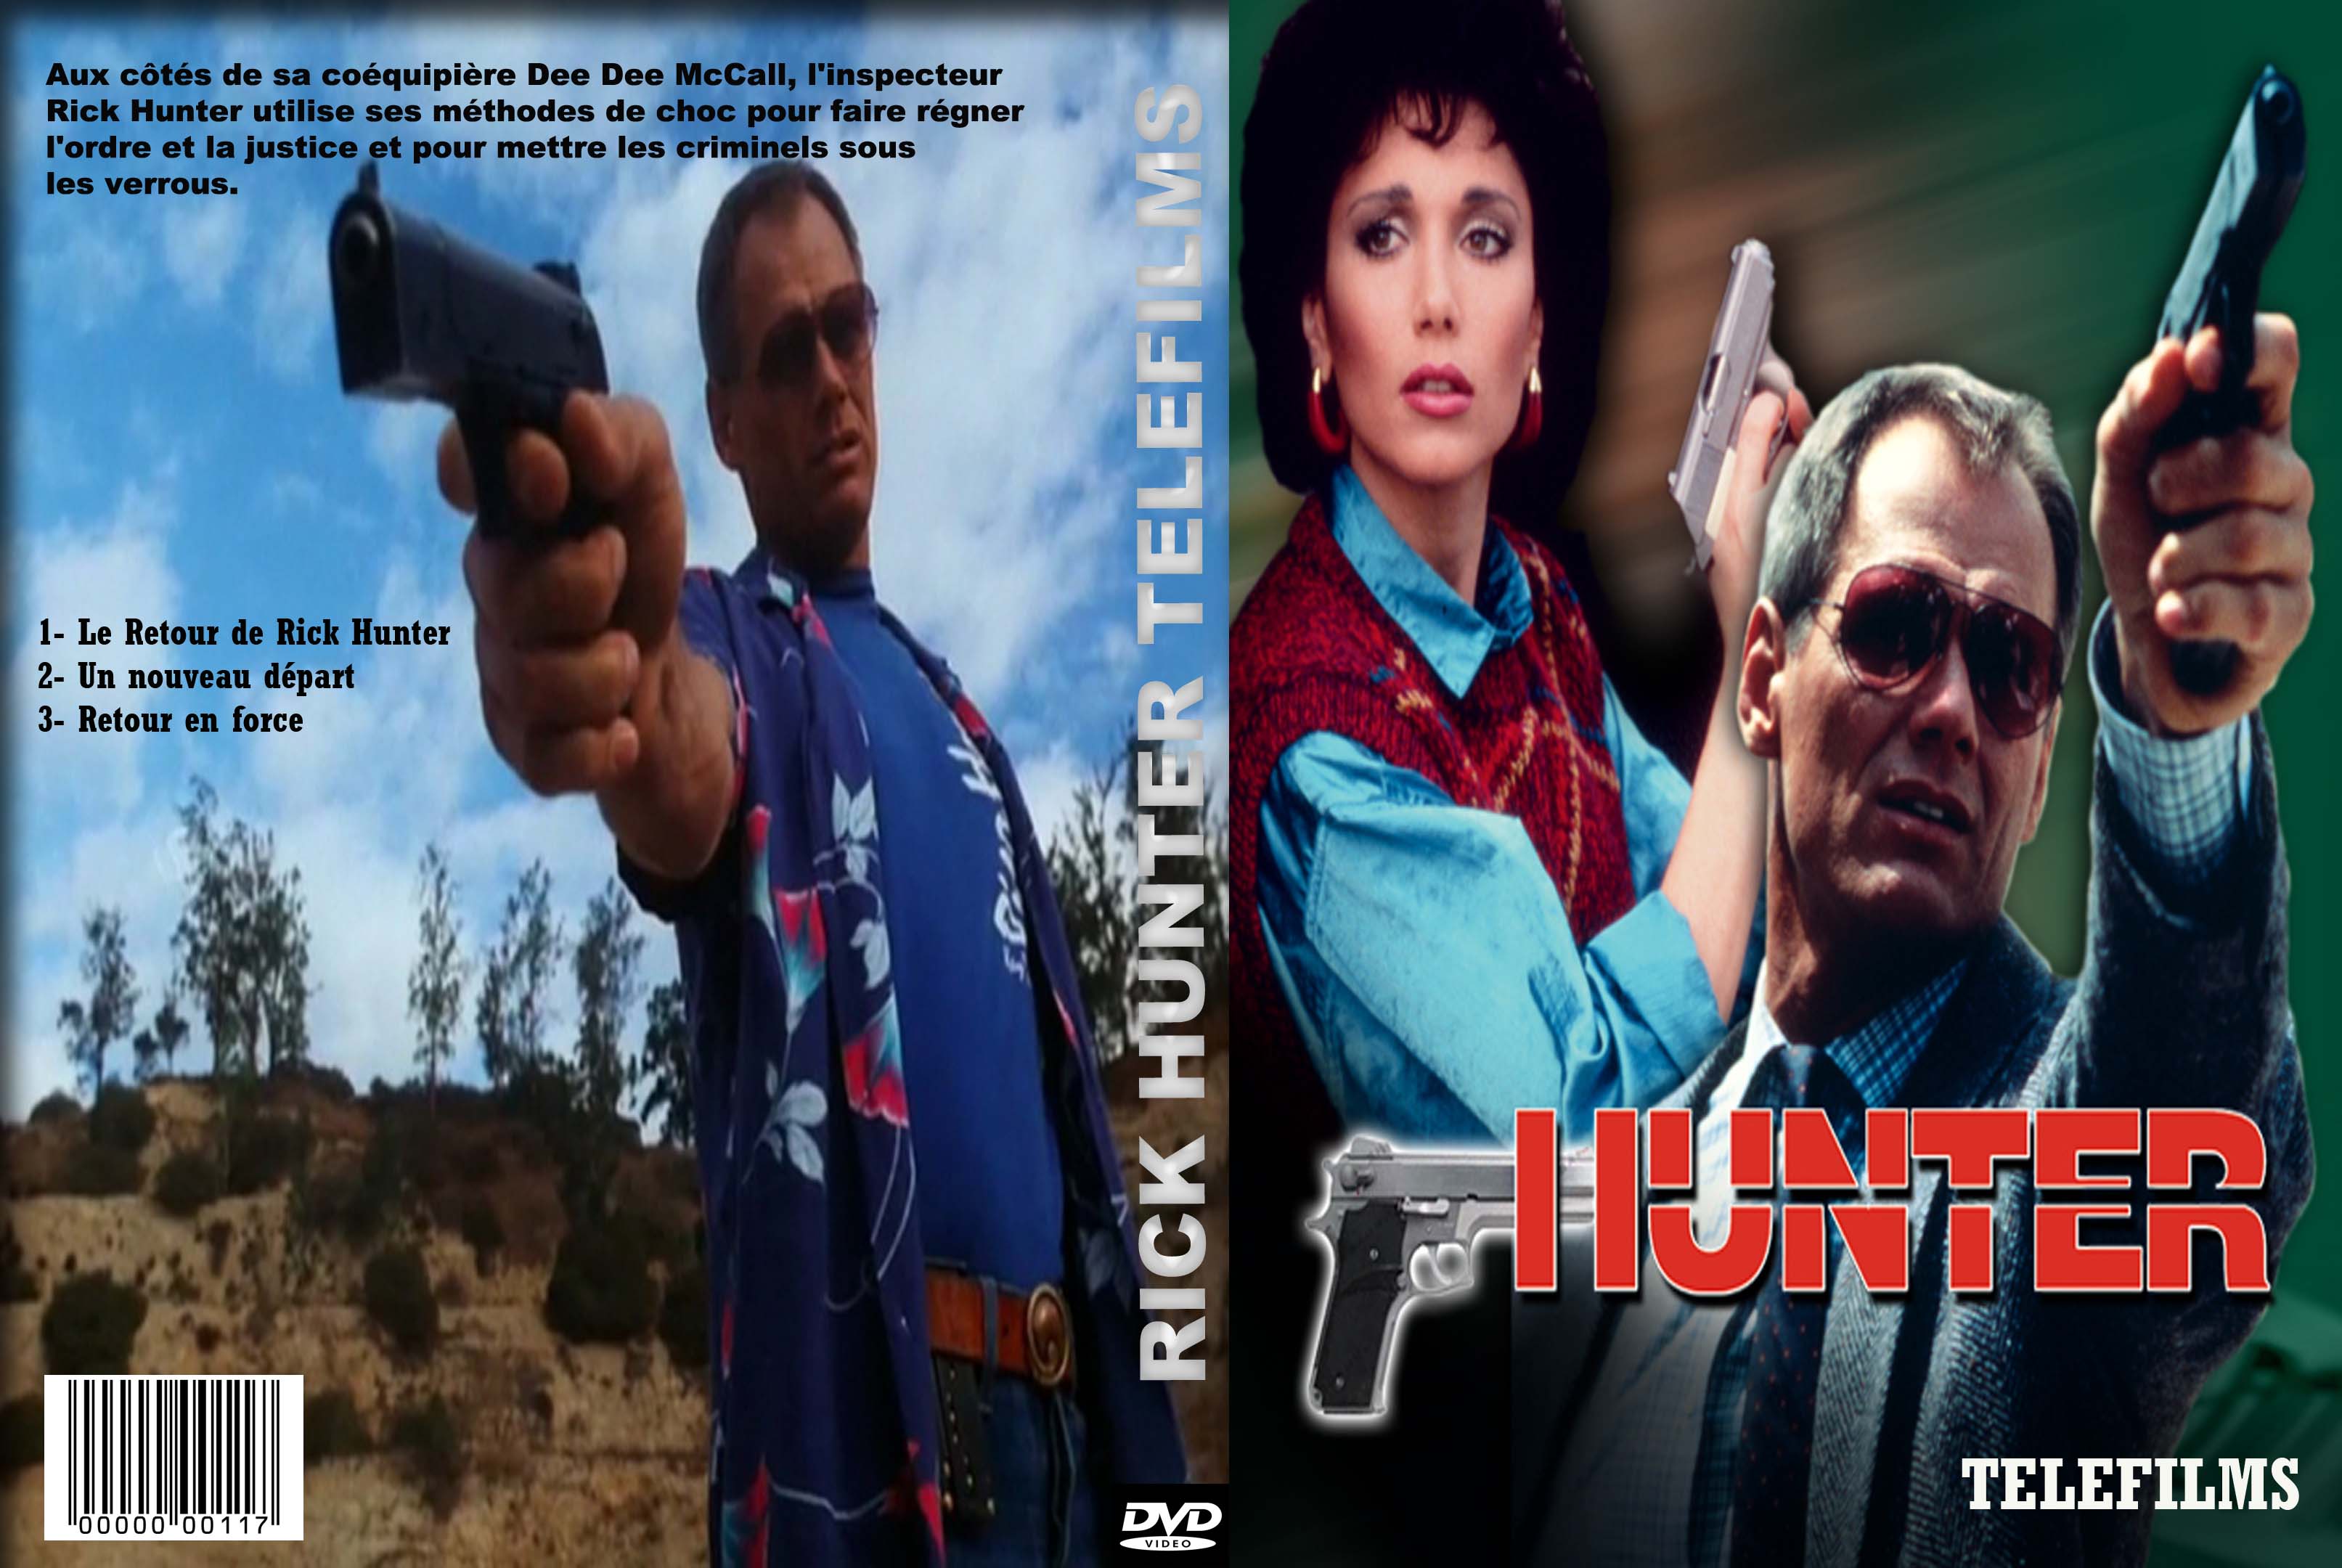 Jaquette DVD Rick Hunter Tlefilms custom